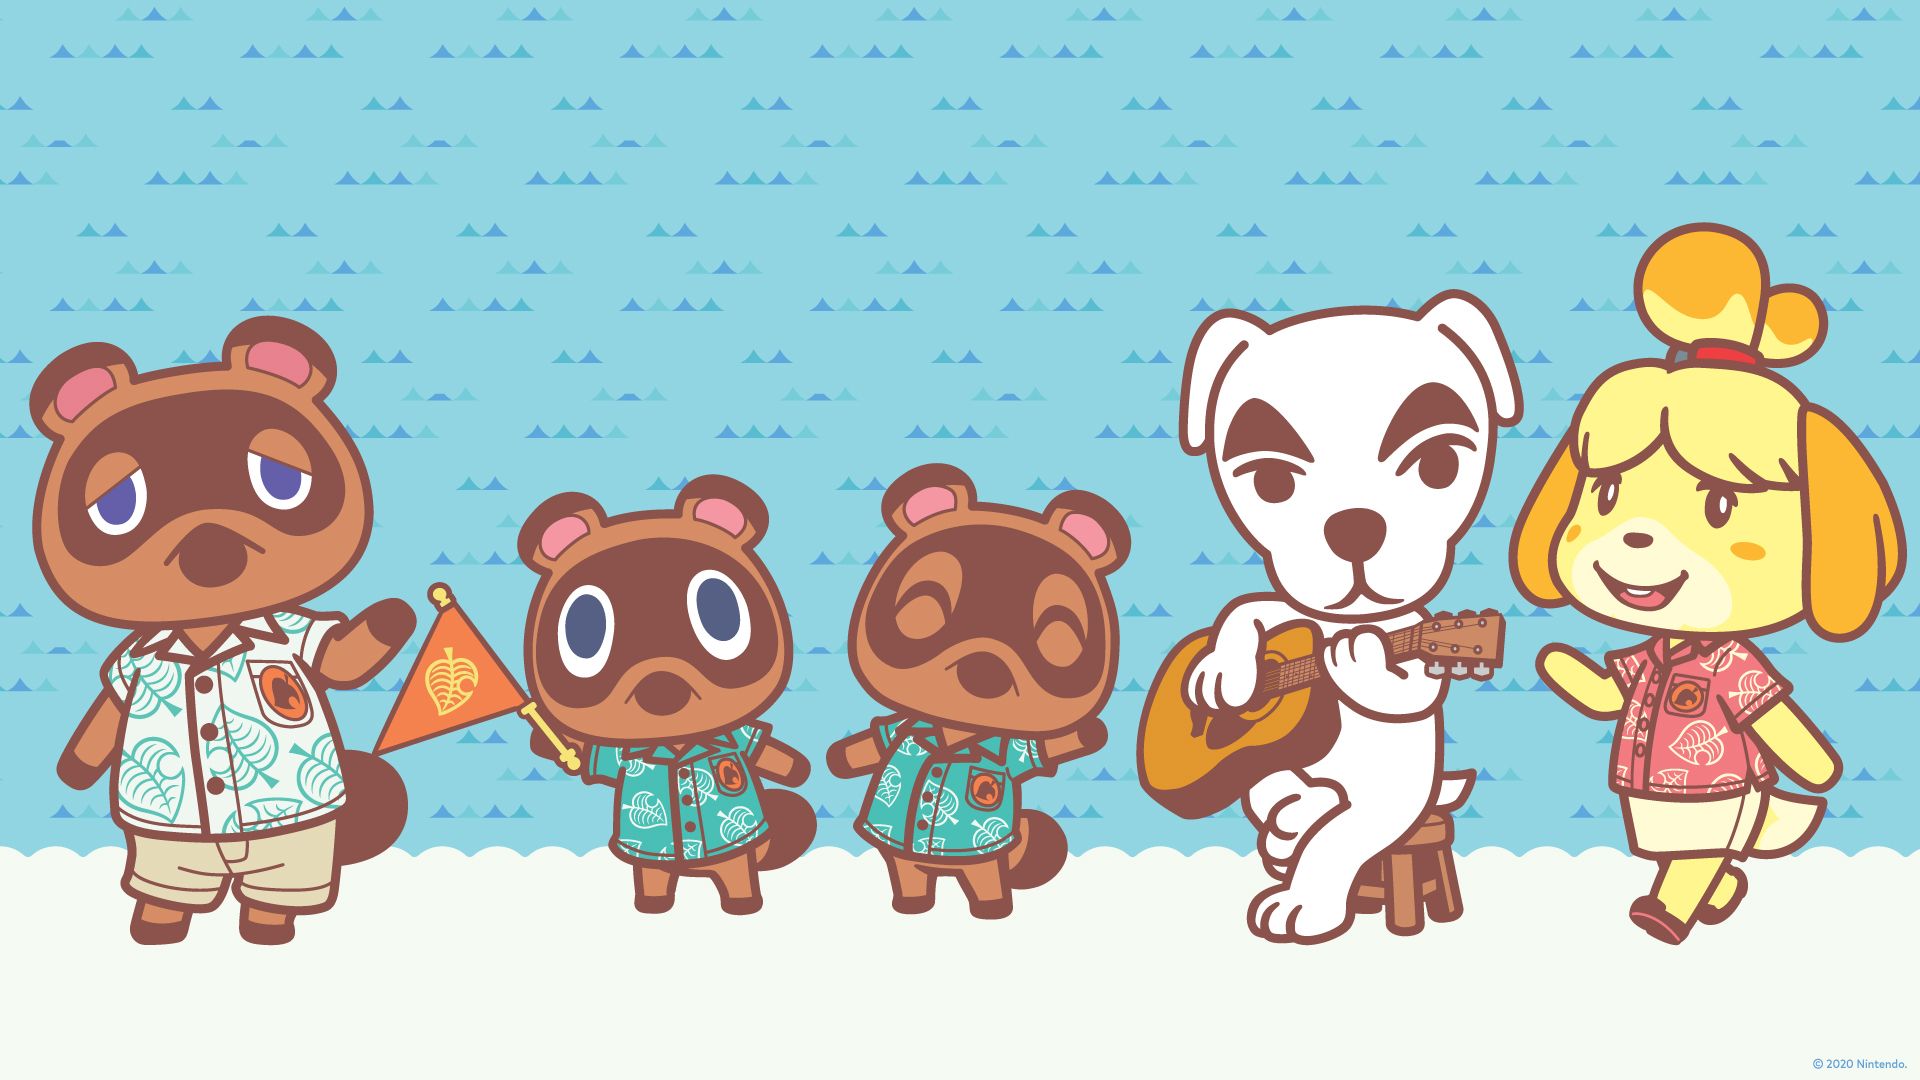 Animal Crossing HD Wallpaper